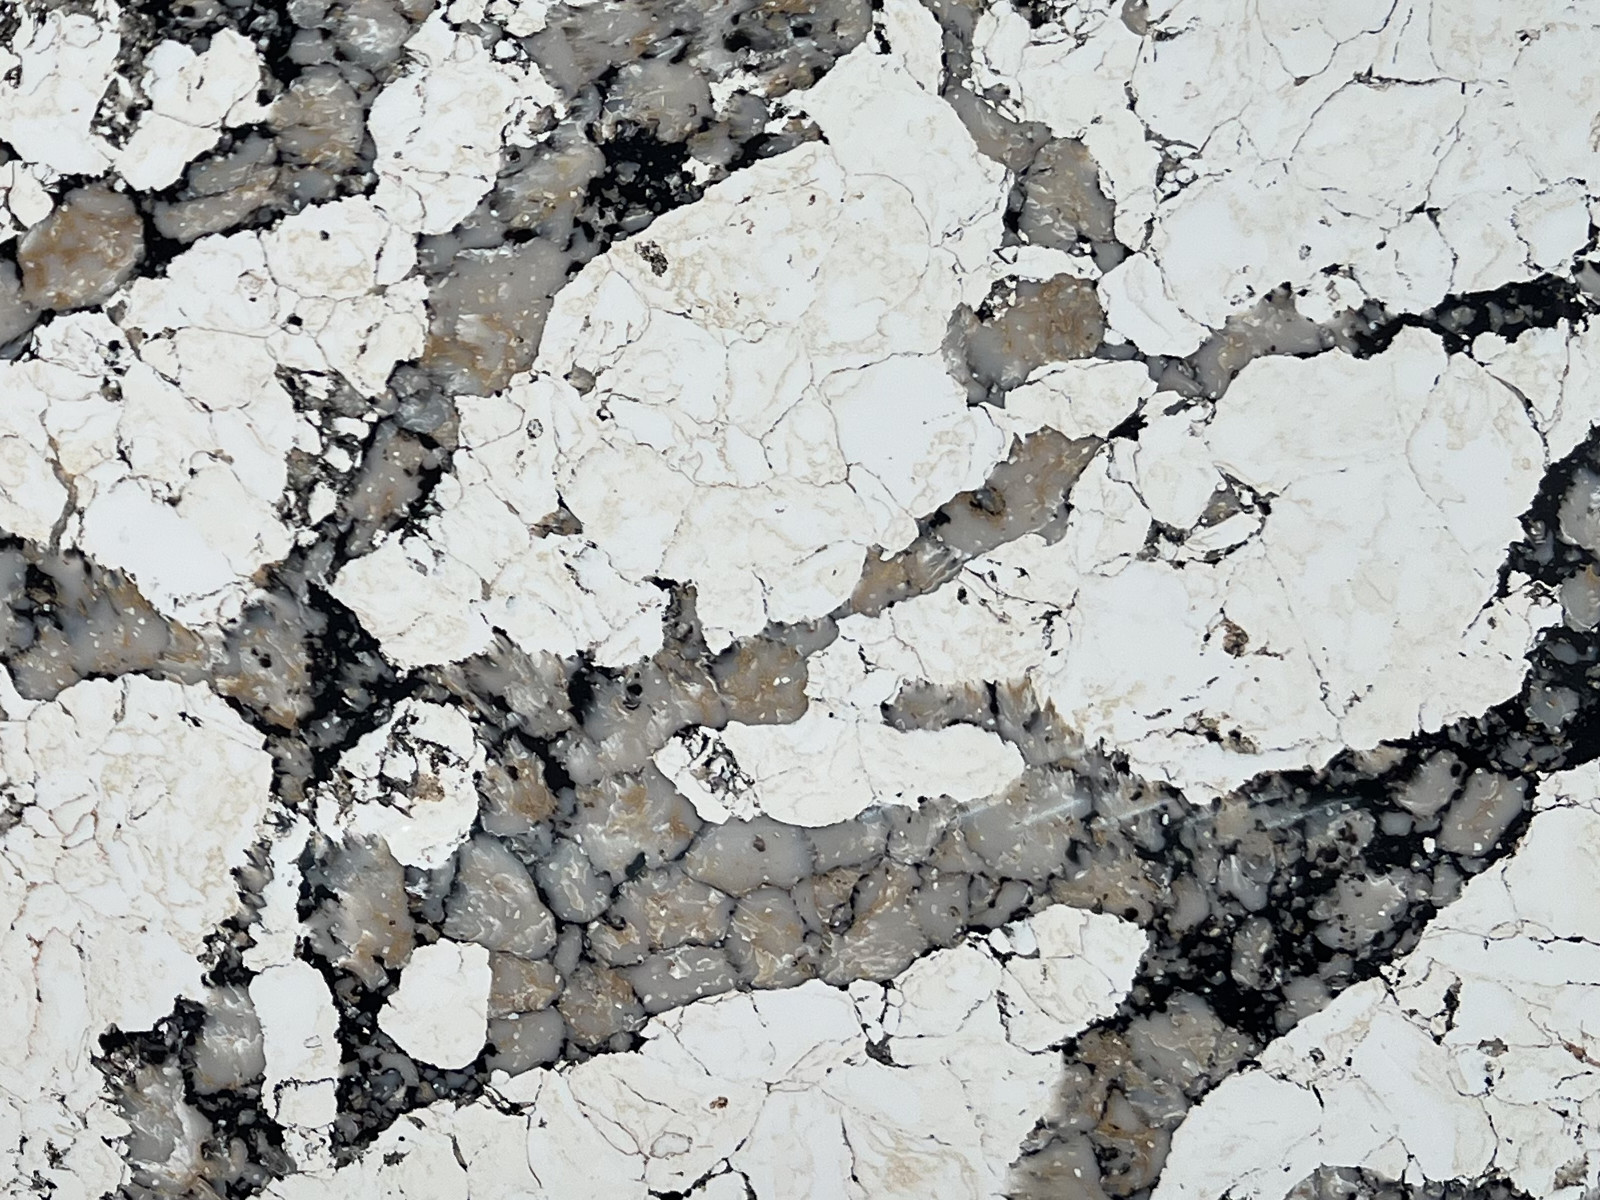 Patagonia Quartz - New Release of High-end quartz to match Luxury Natural Stone